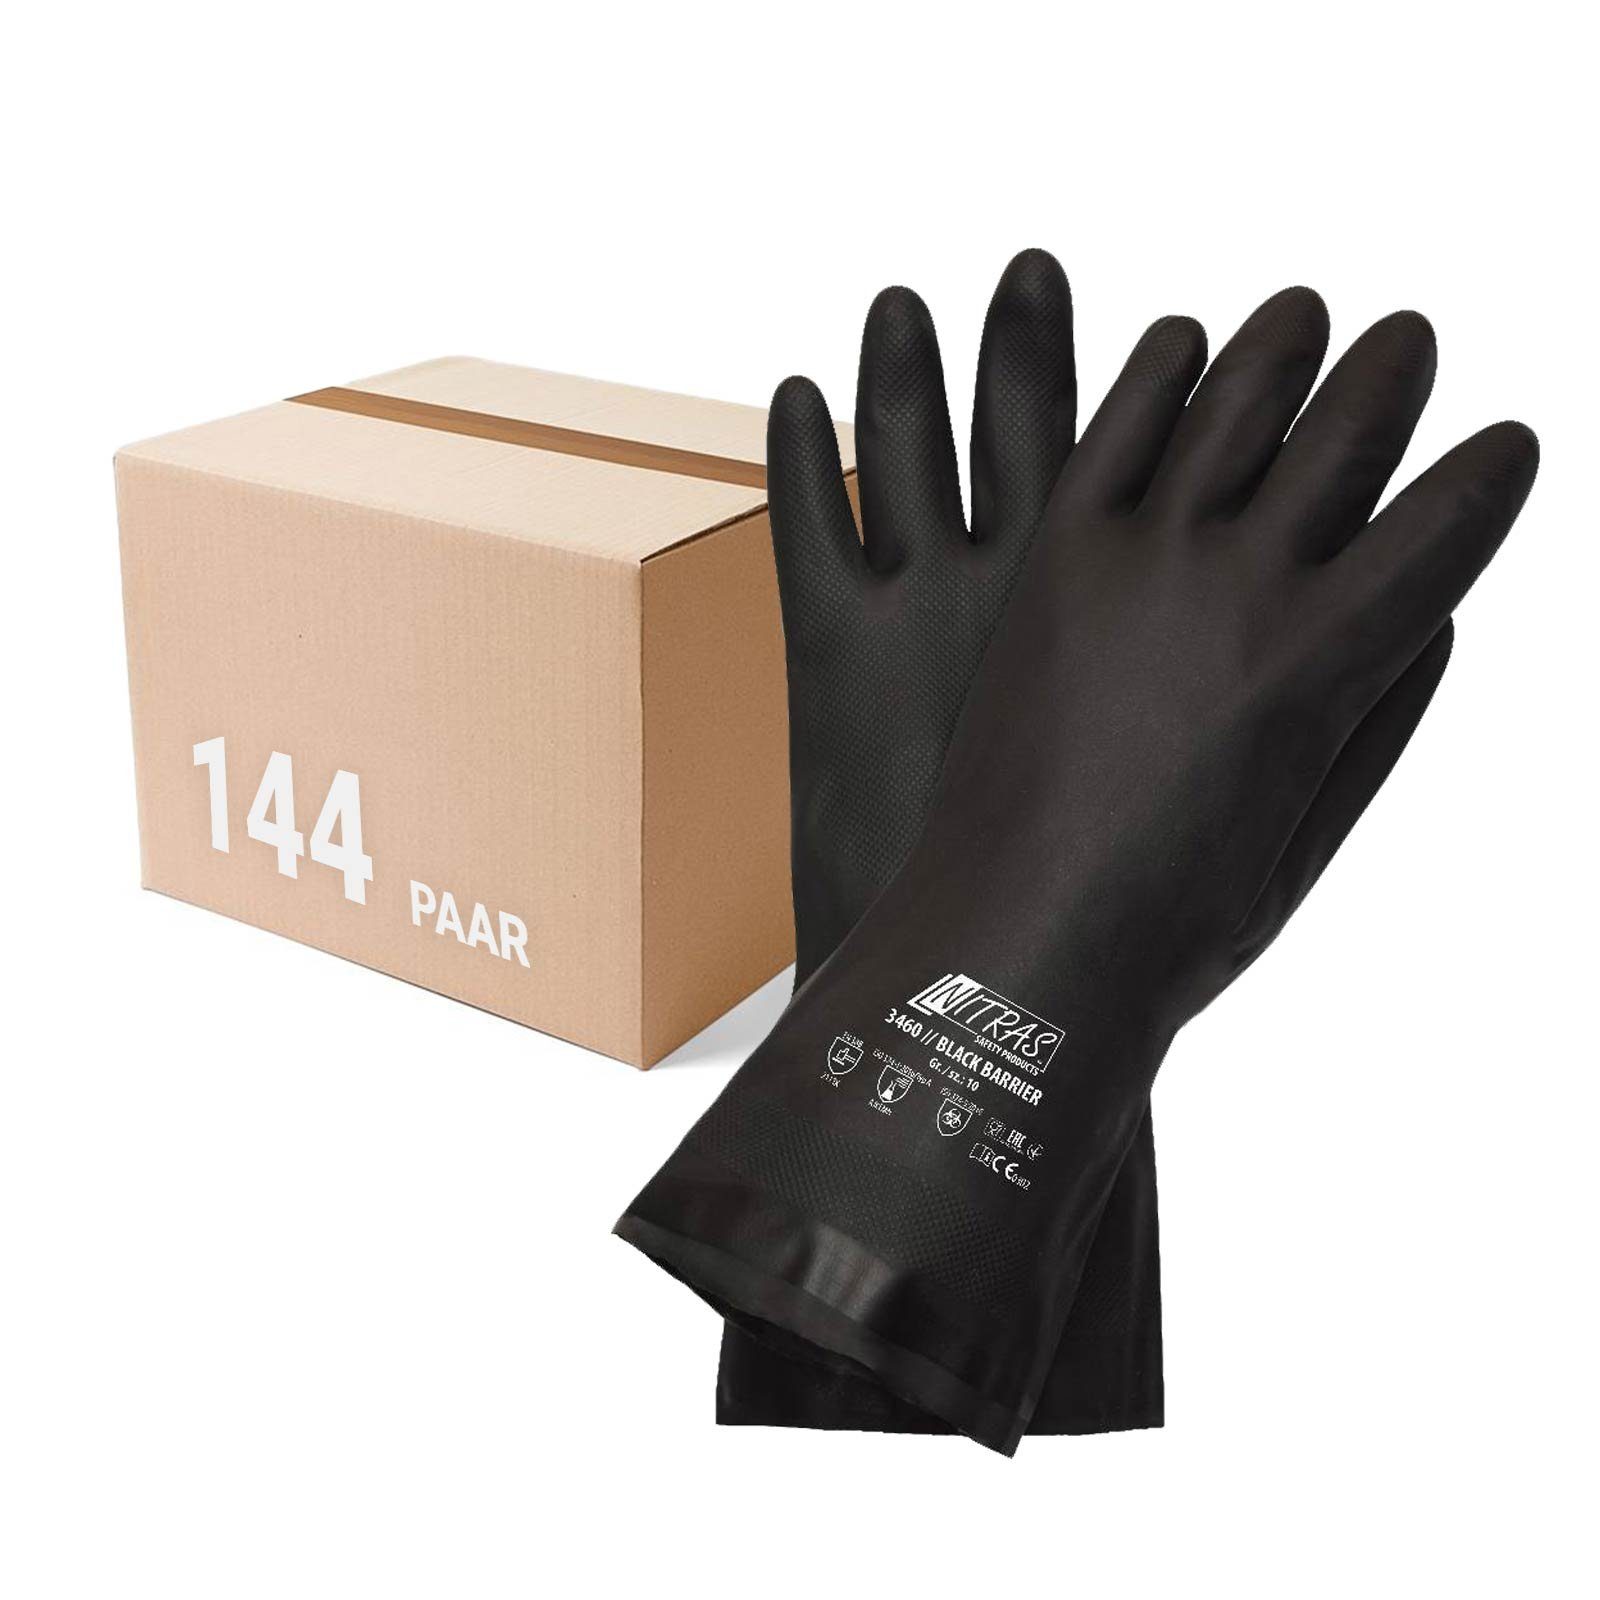 Putzhandschuh Black Nitras Chloroprene-Handschuhe Paar NITRAS (Set) velourisiert 144 3460 Barrier